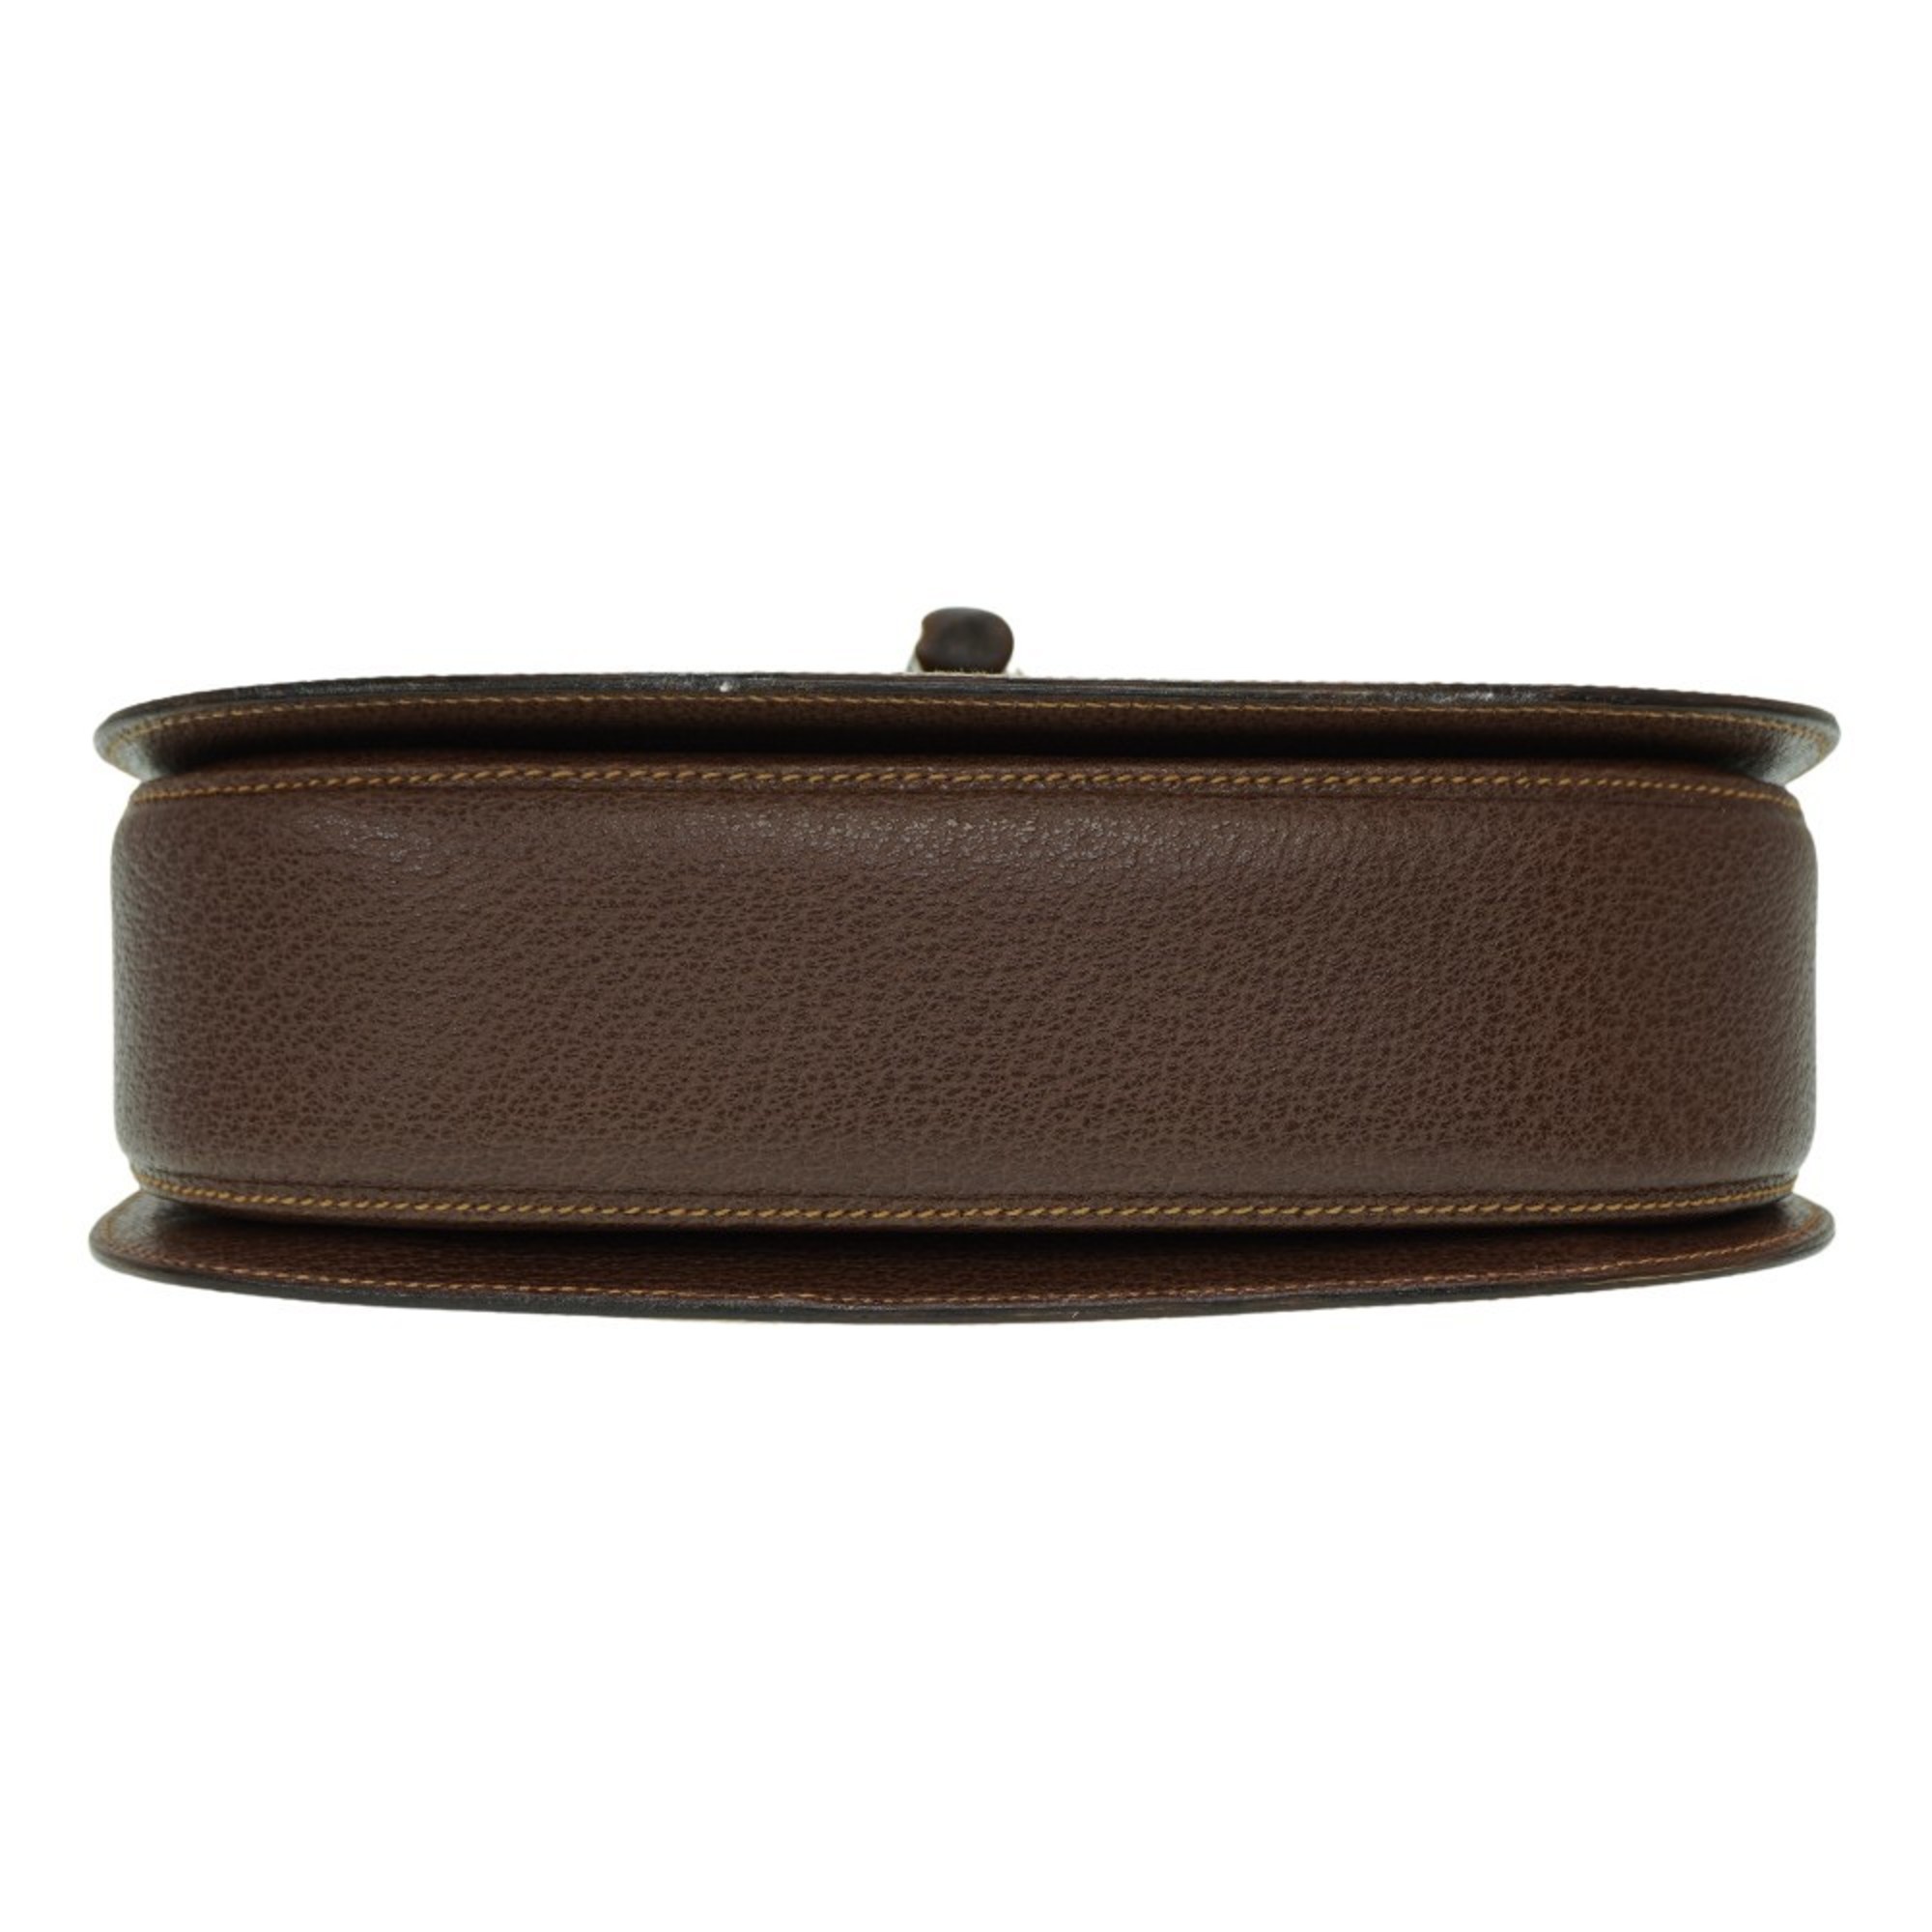 Gucci Bamboo Shoulder Handbag Leather Brown 0041GUCCI with shoulder strap 6B0041IEZ6